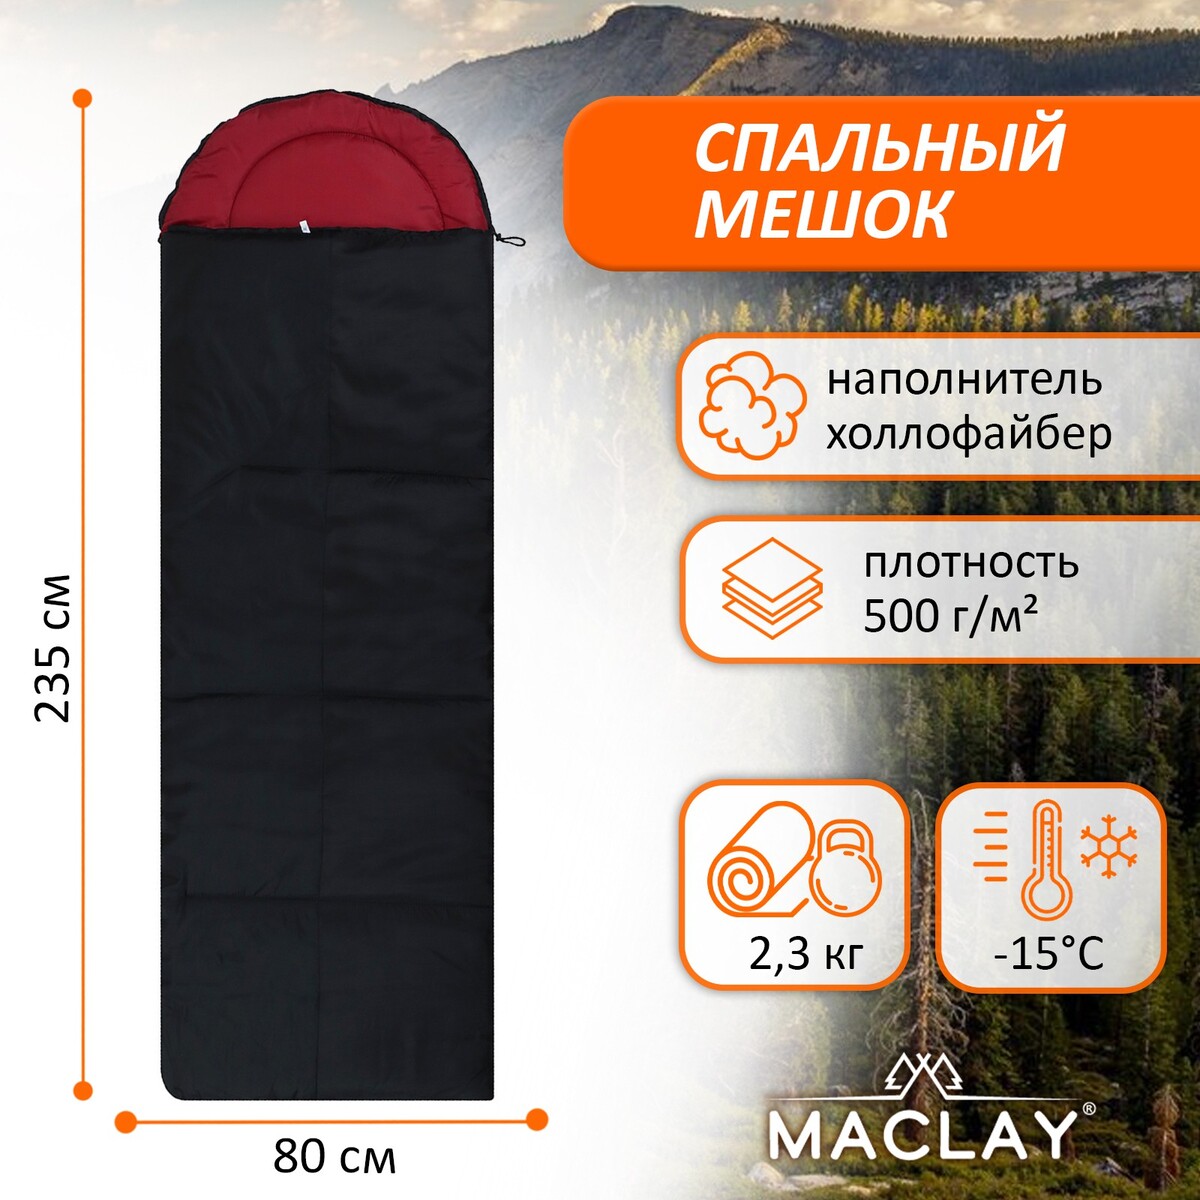 фото Спальник-одеяло maclay, с подголовником, 235х80 см, до -15°с